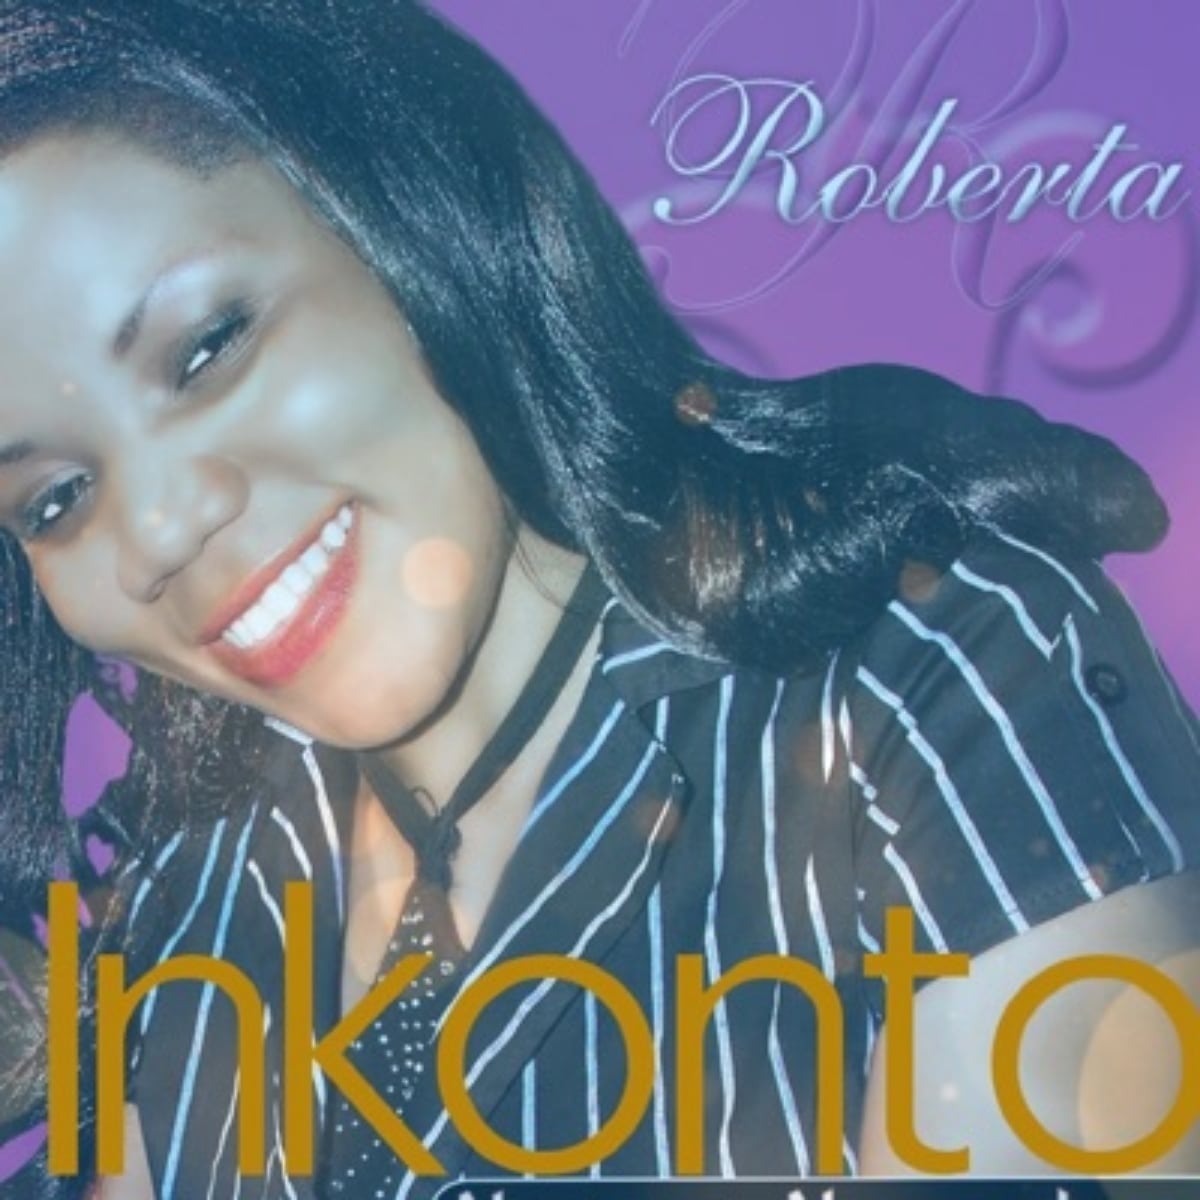 DOWNLOAD: Roberta – “Inkonto” Mp3